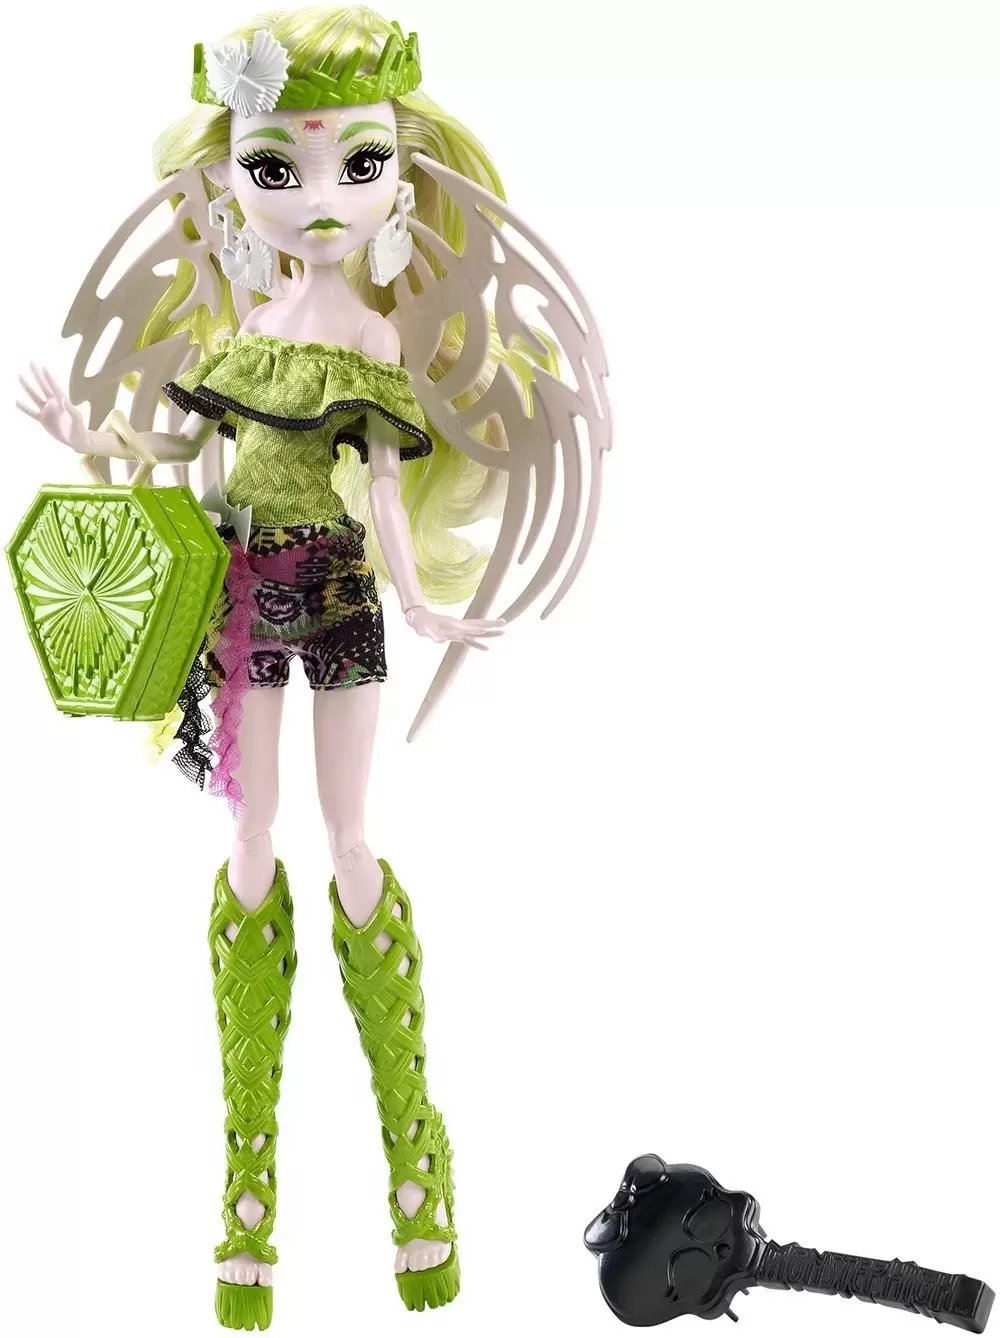 Monster High Dolls - Batsy Claro - Daughter of the White Vampire Bat - Brand-Boo Students